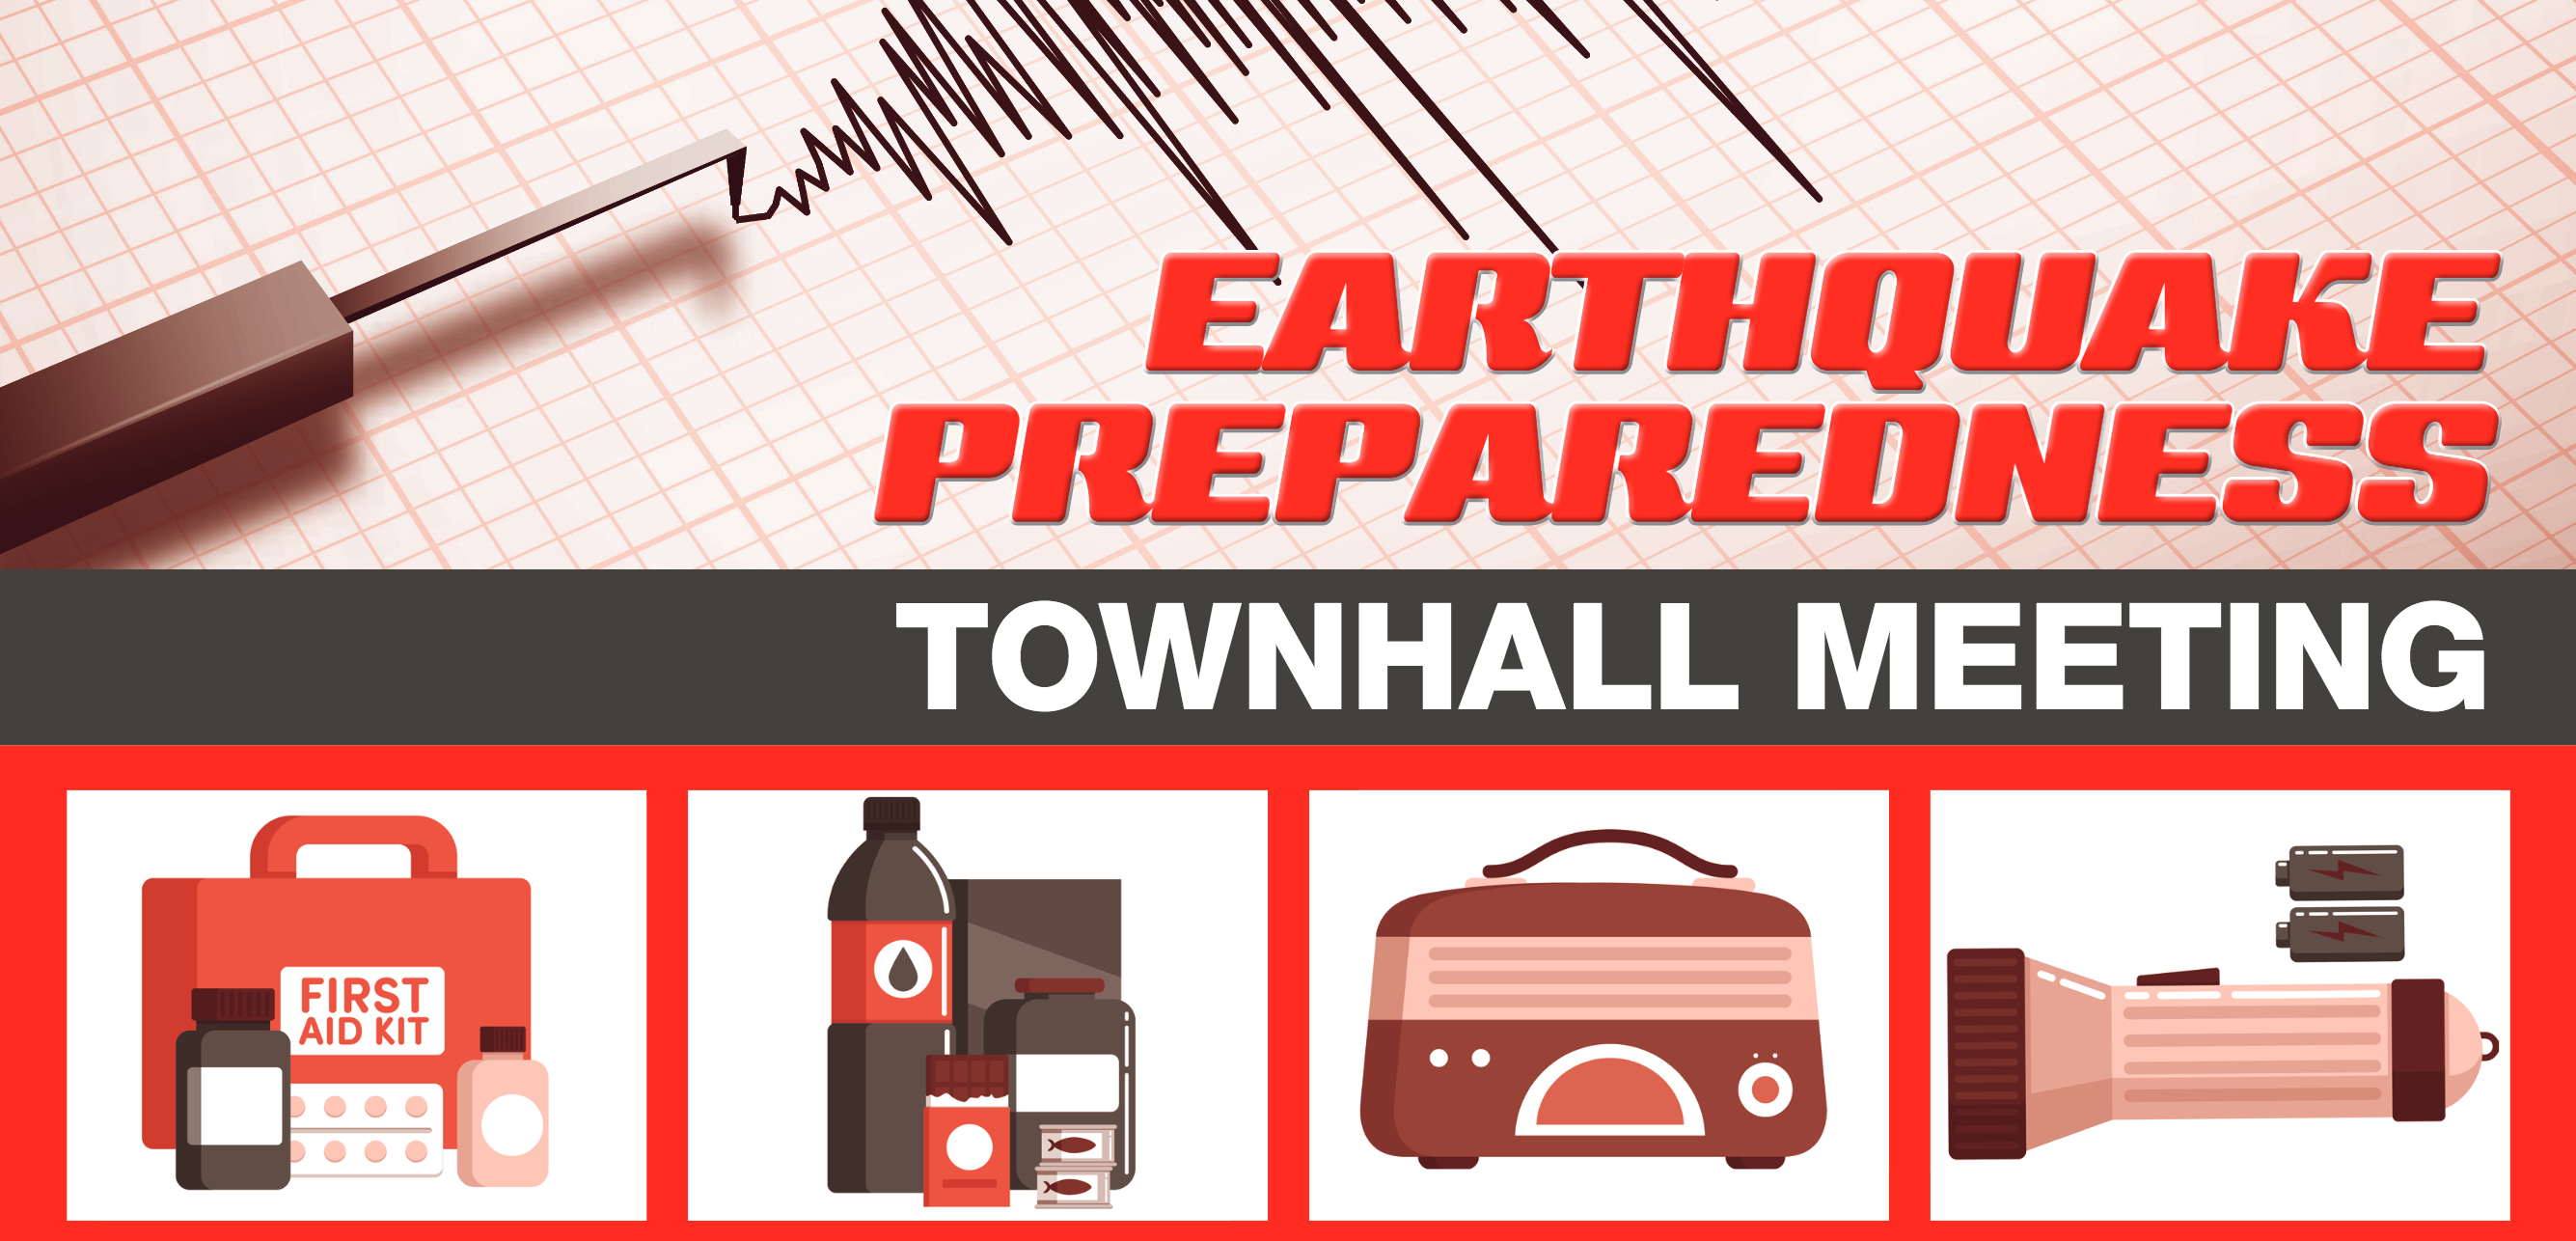 Earthquake Preparedness Townhall Meeting